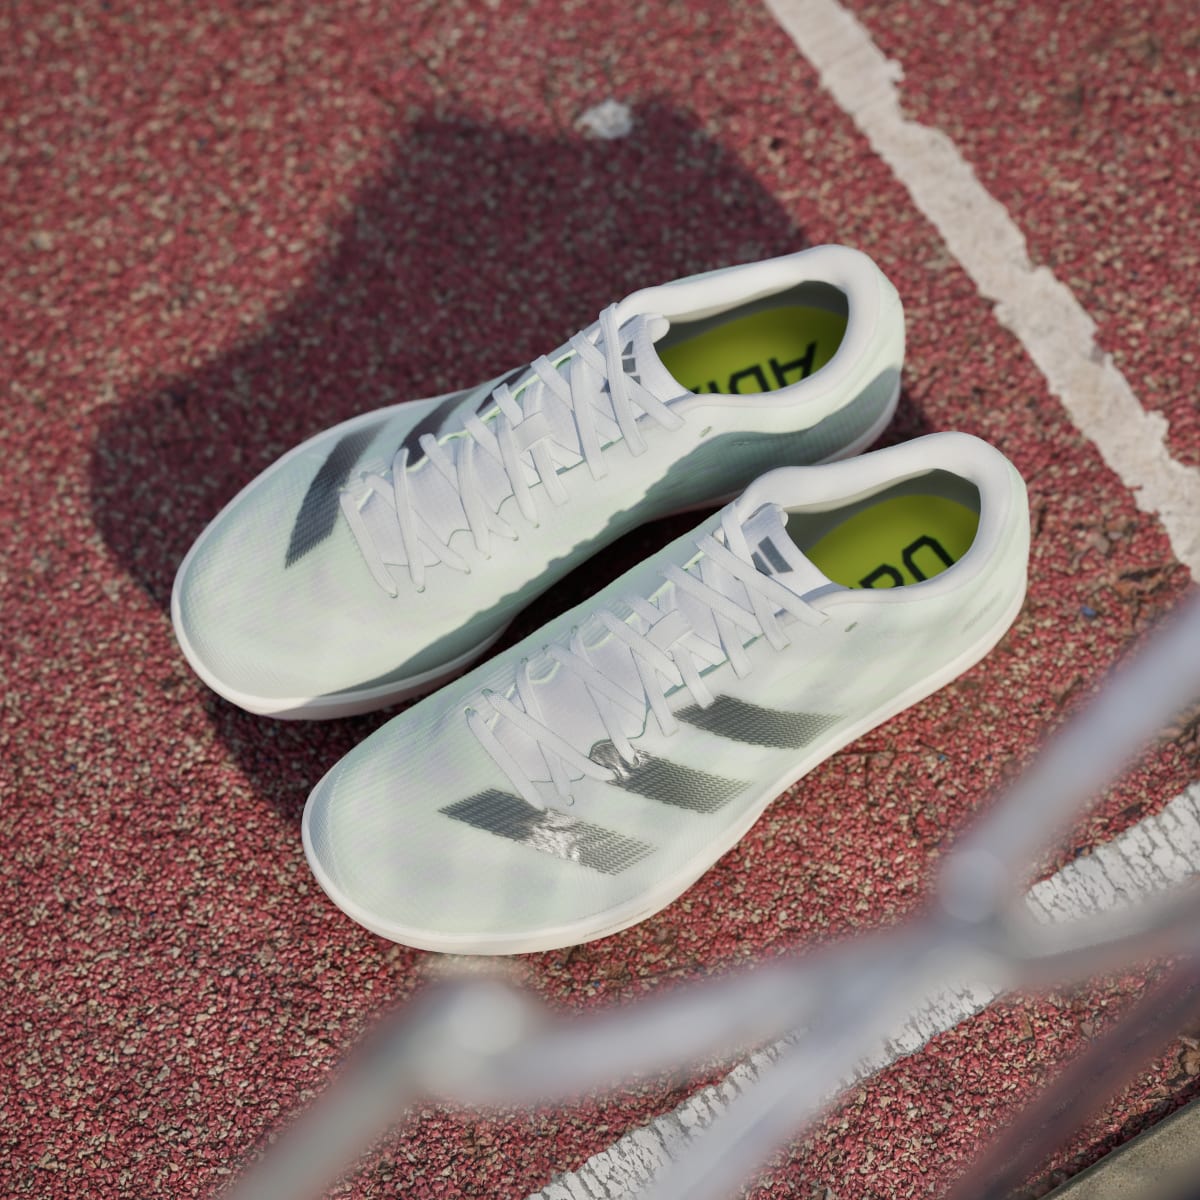 Adidas Adizero Long Jump Shoes. 7